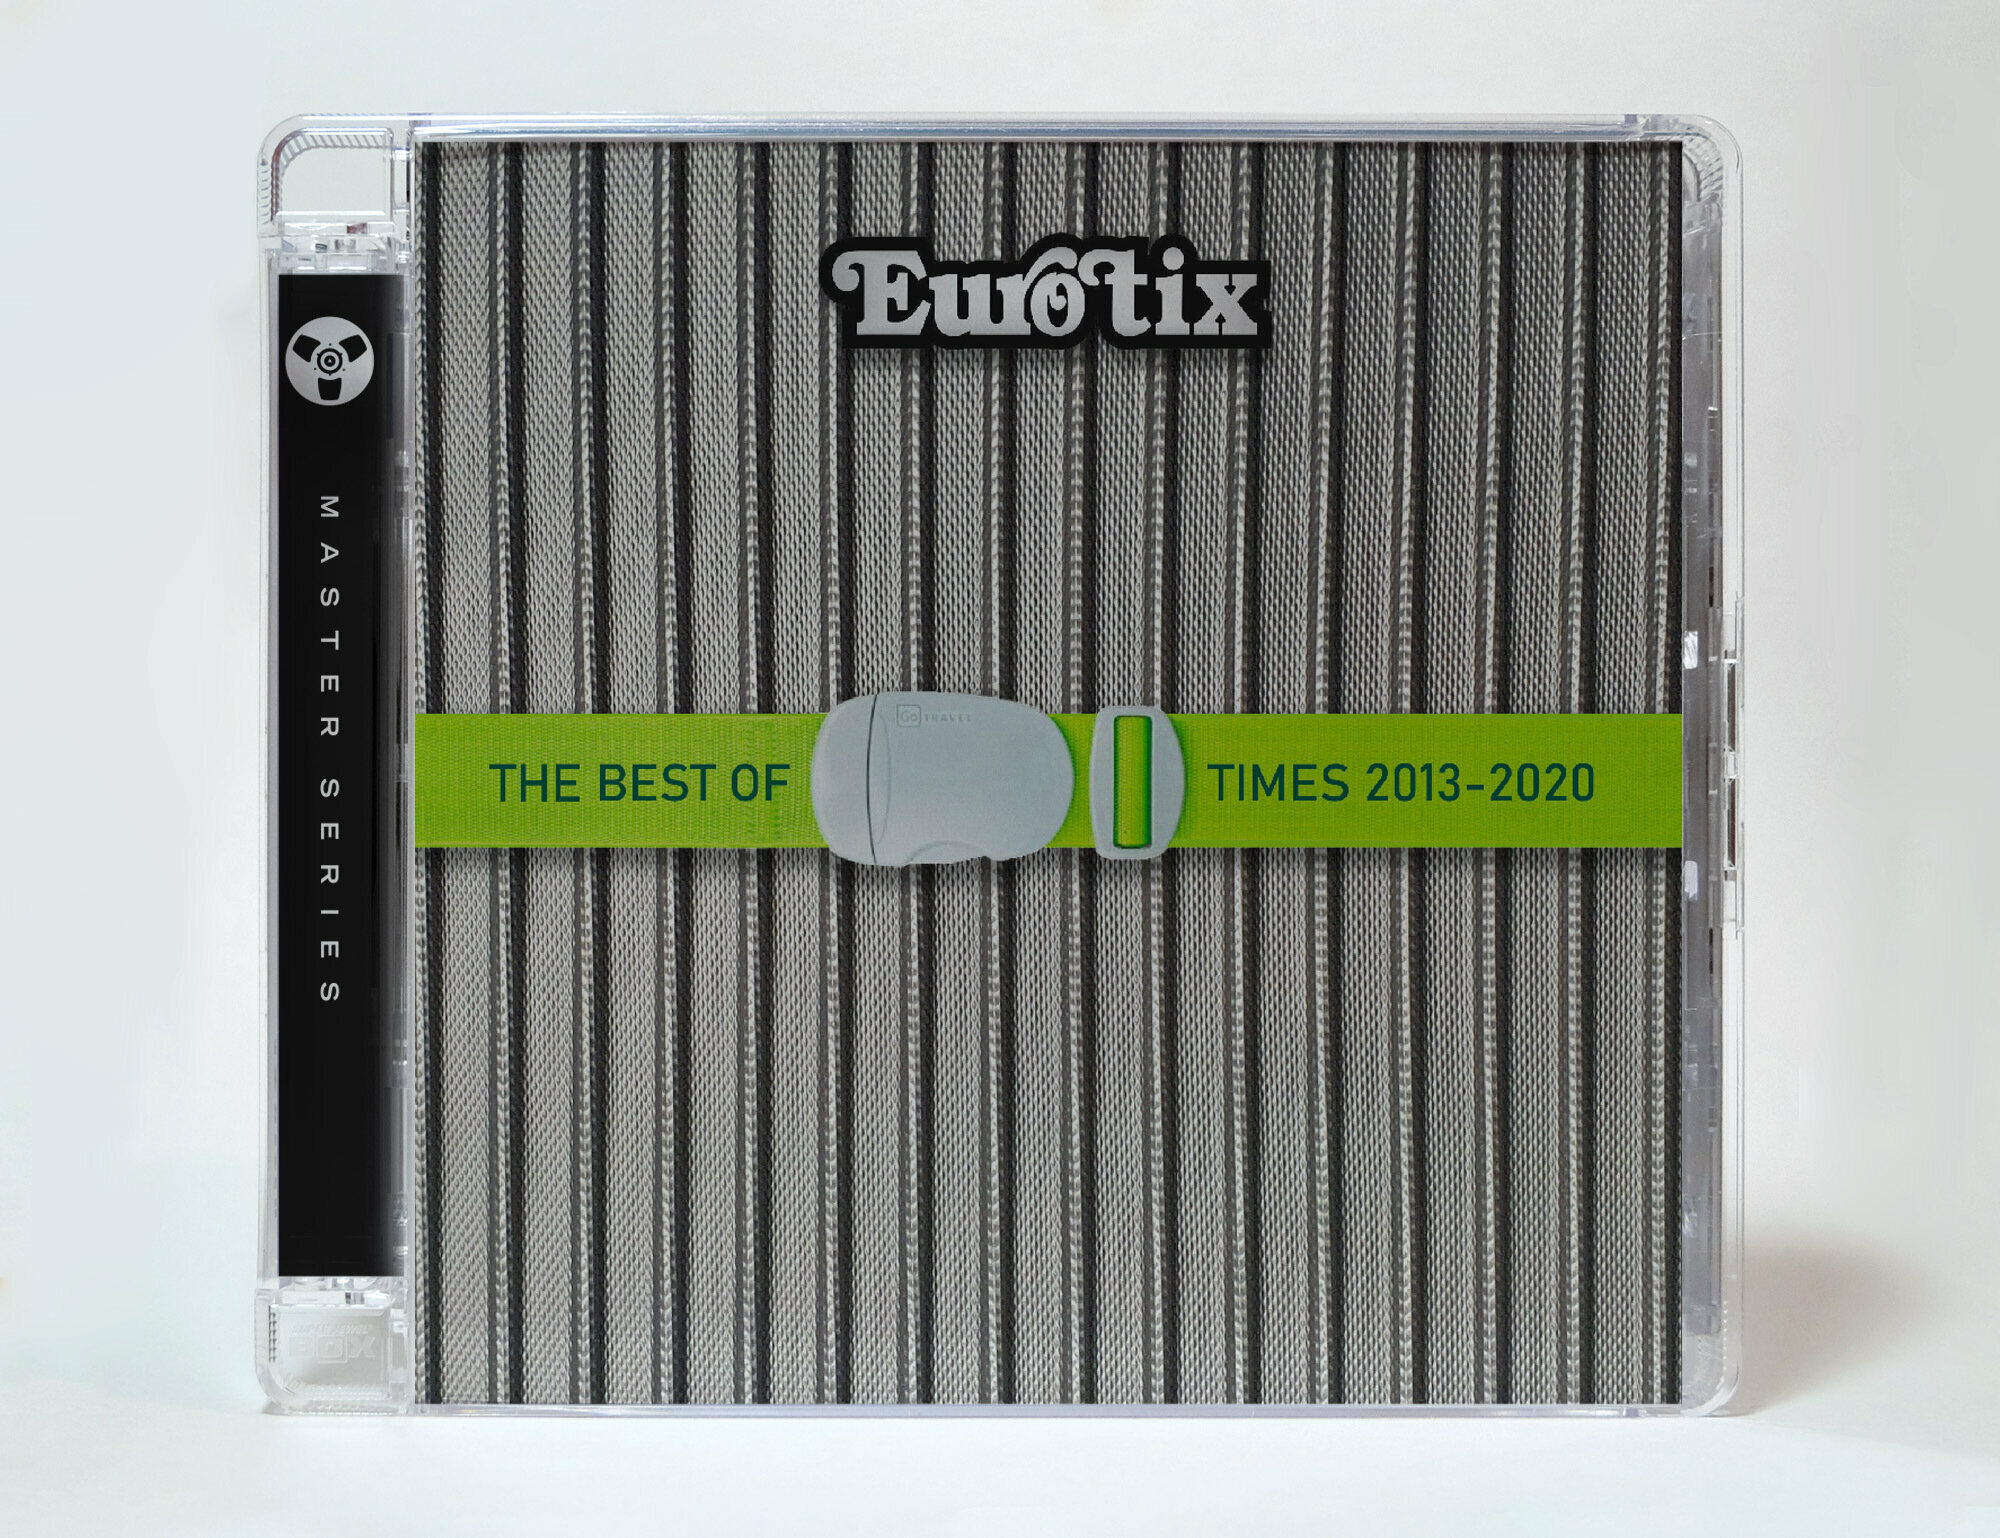 CD Eurotix - "The Best Of Times: 2013-2020" (2020) 2CD